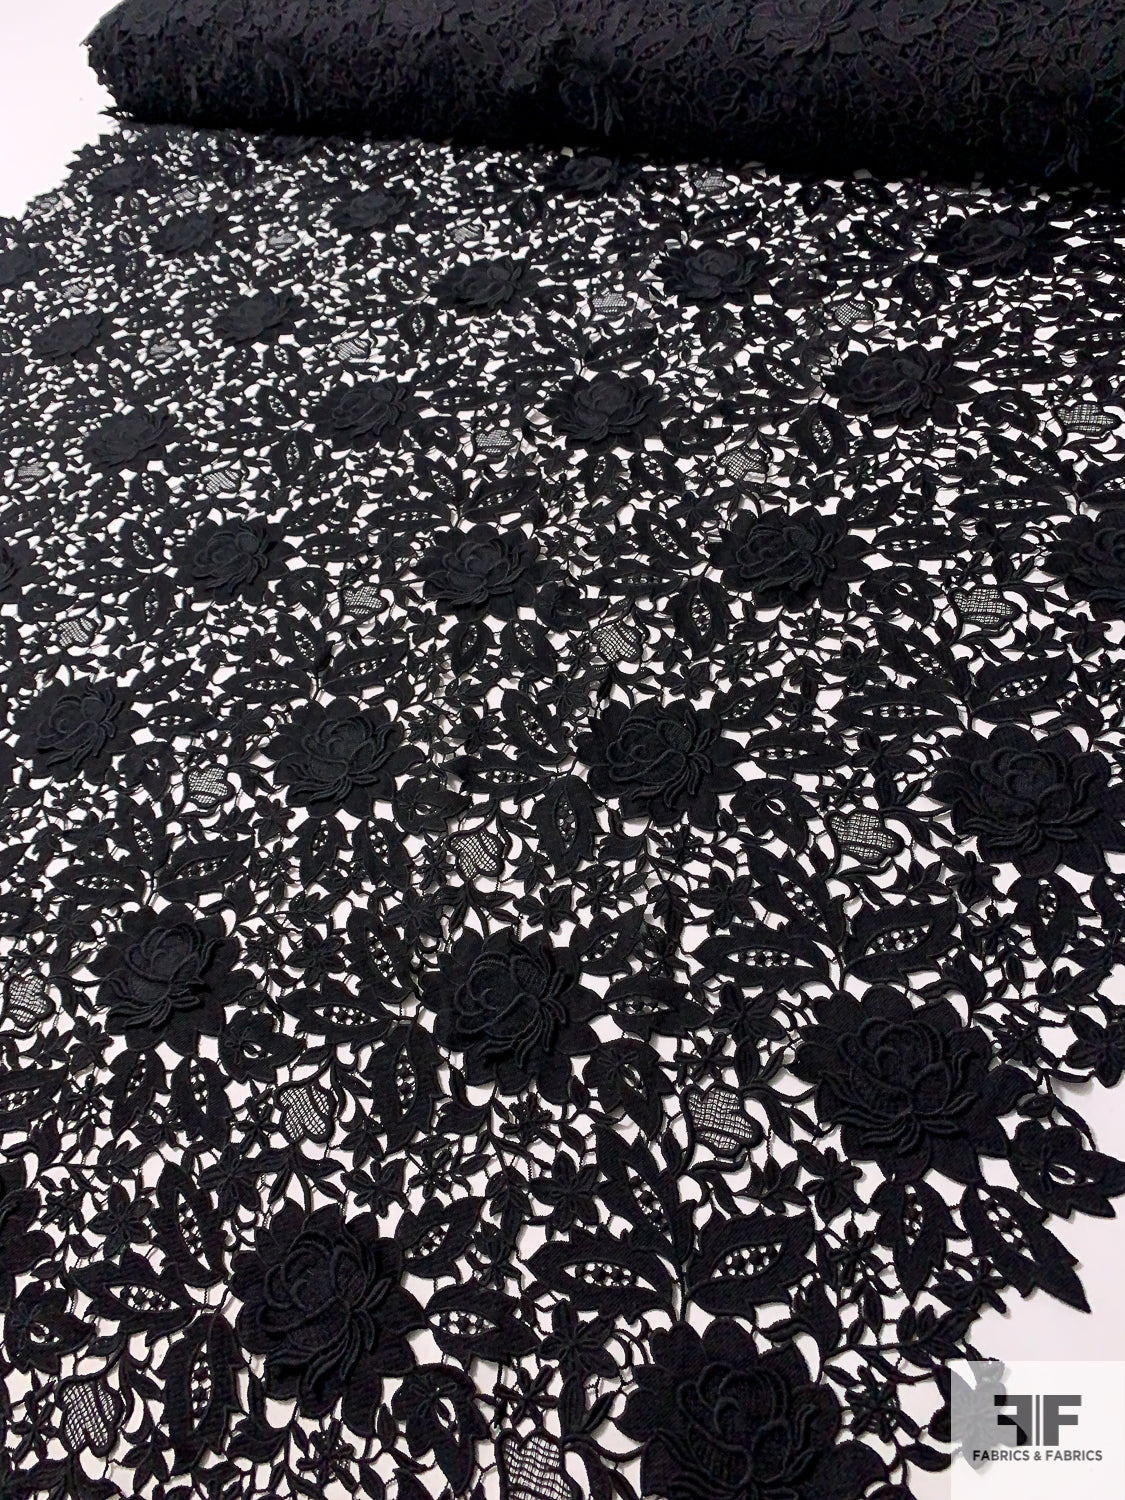 Black Lace Fabric, Black Guipure Lace Fabric, Crochet Lace Fabric